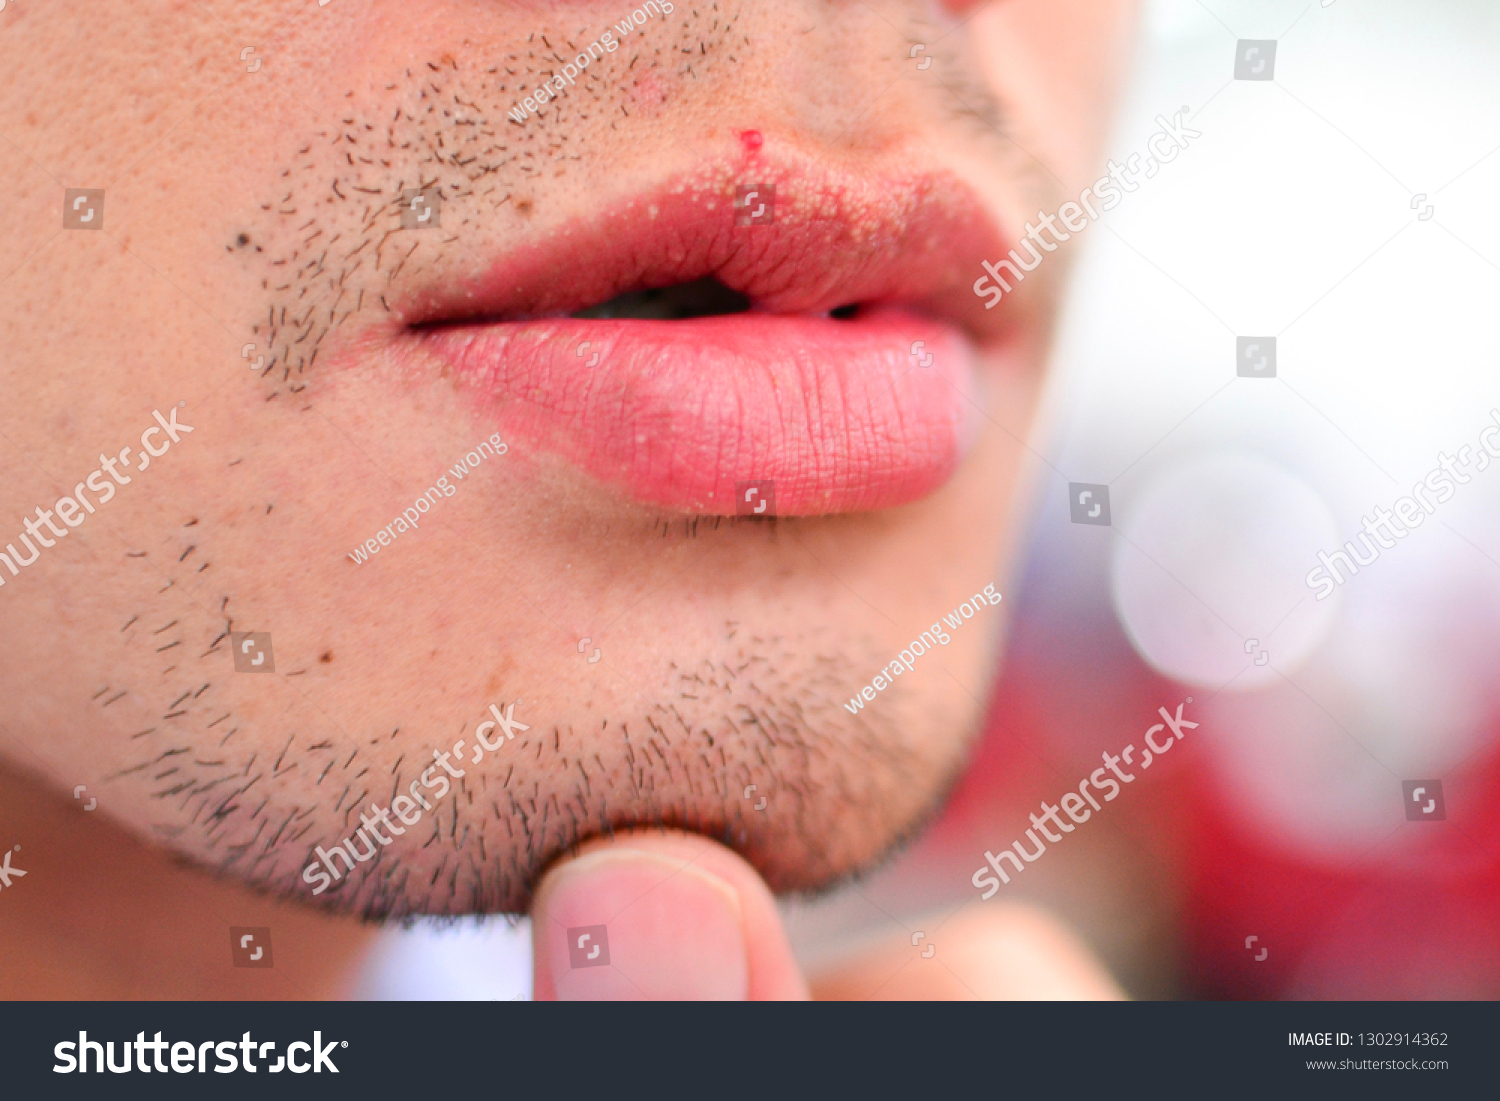 Fordyce Spots On Lips Stock Photo 1302914362 Shutterstock